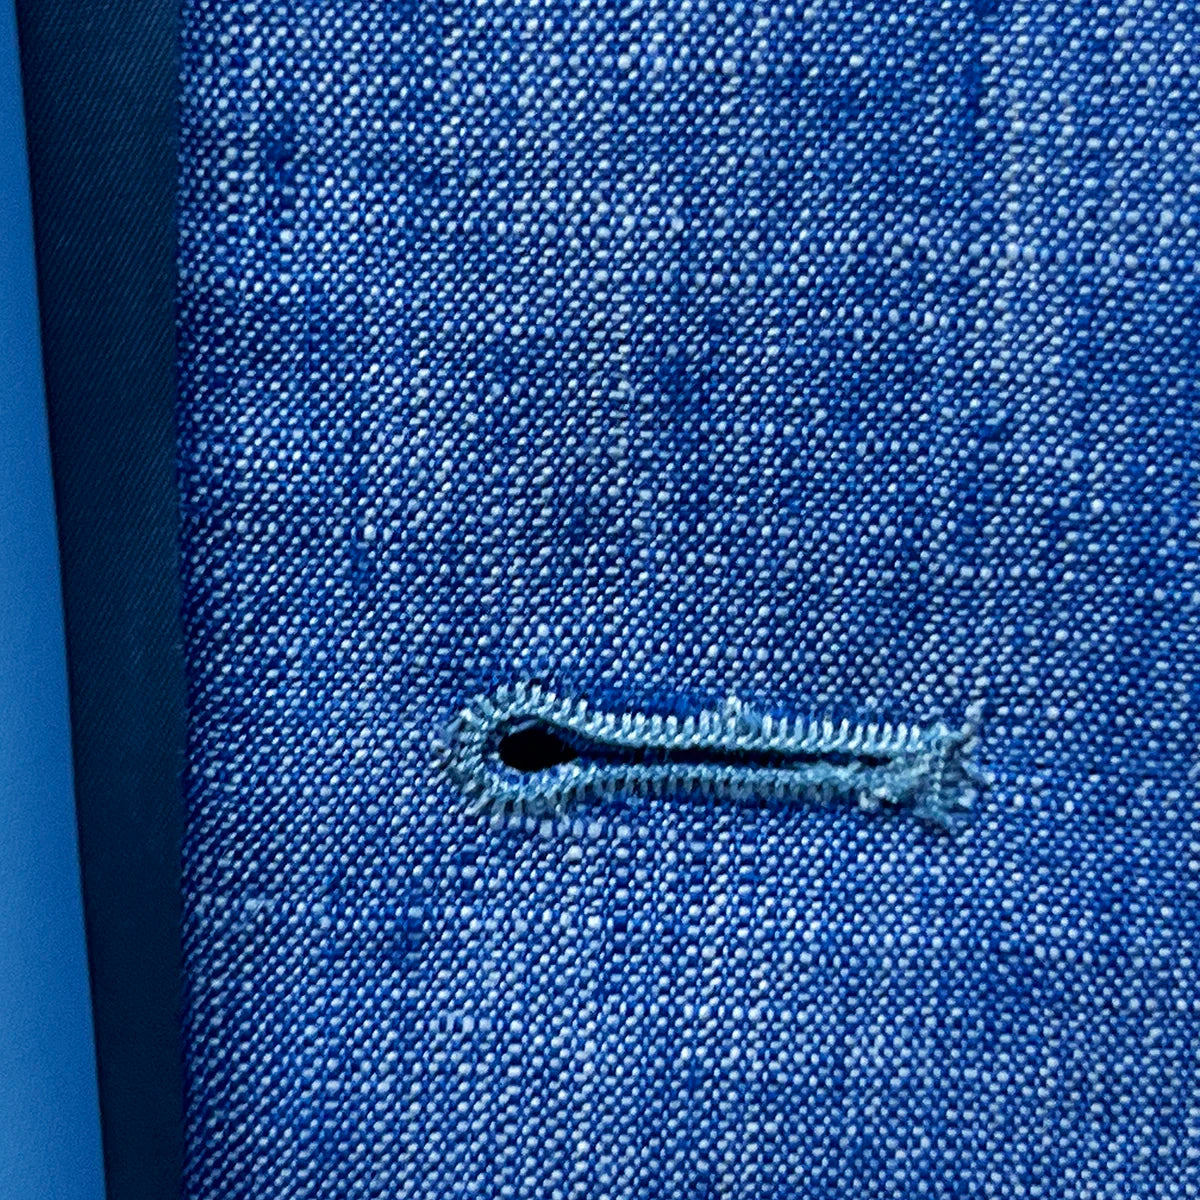 Macro shot of buttonhole stitching on light blue solid Irish linen men's suit, highlighting quality craftsmanship